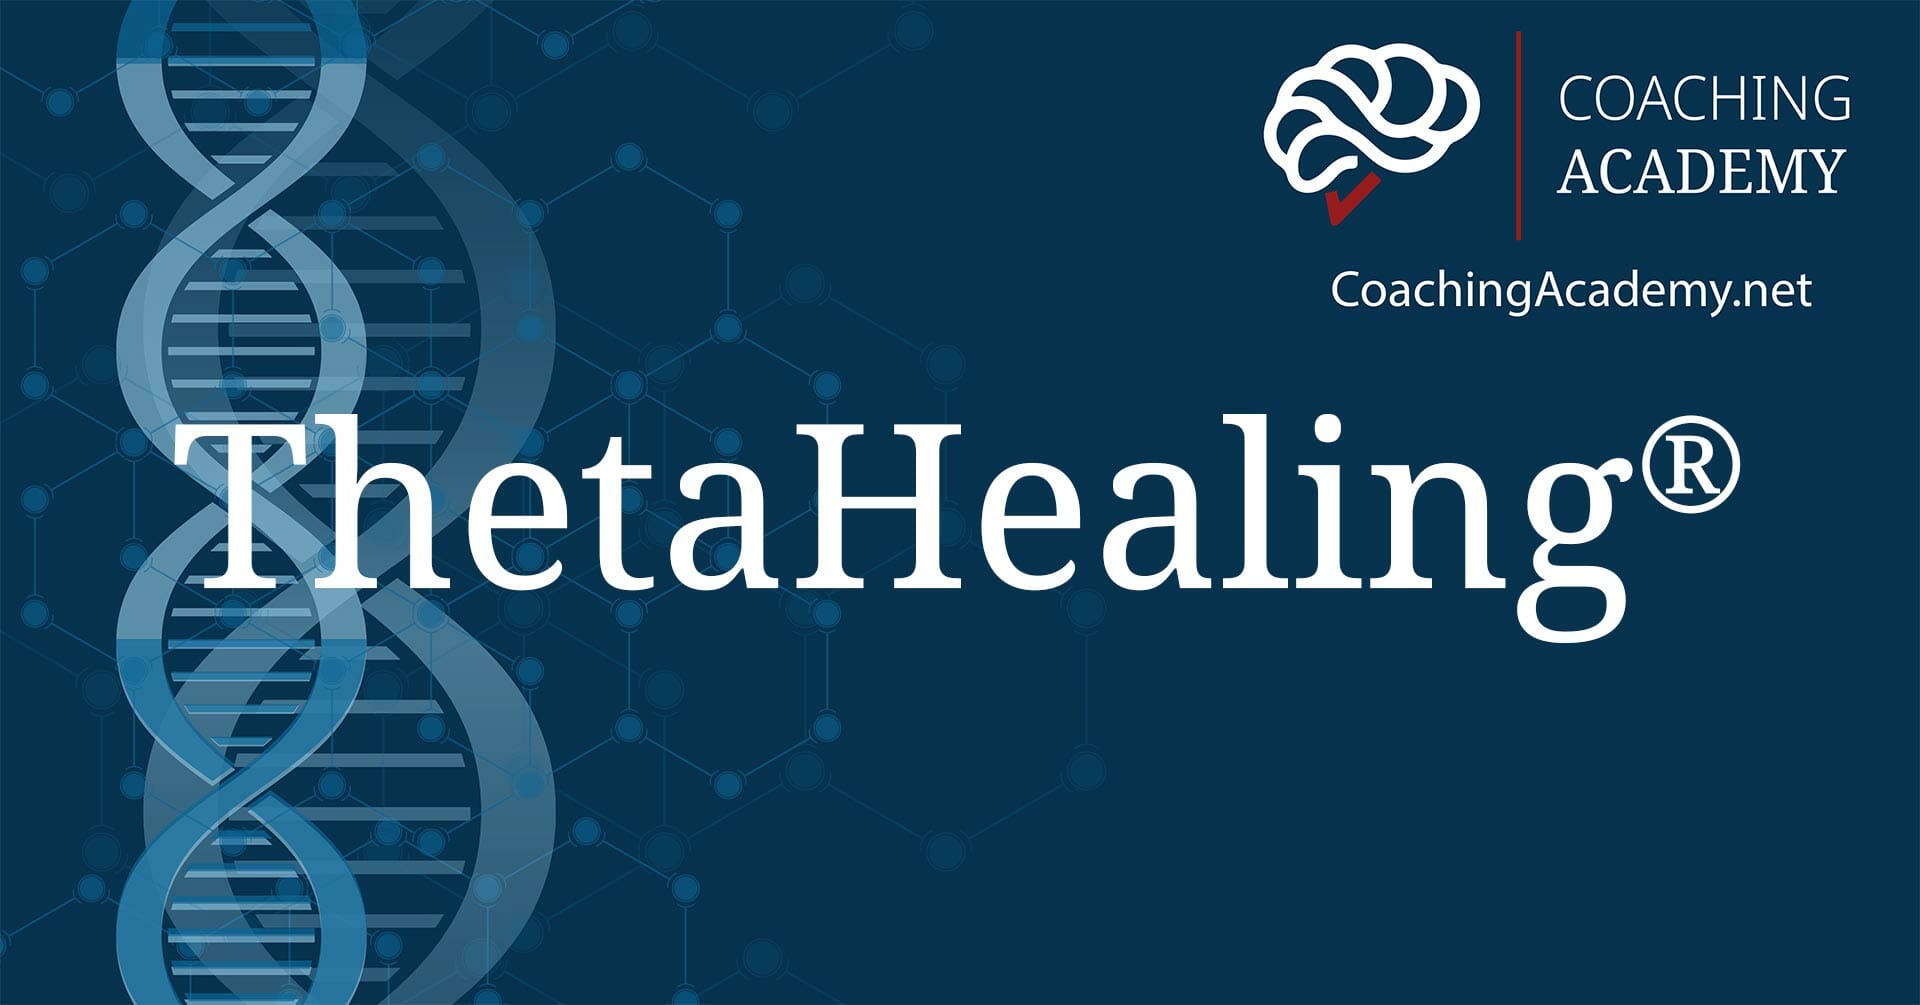 What is Theta Healing